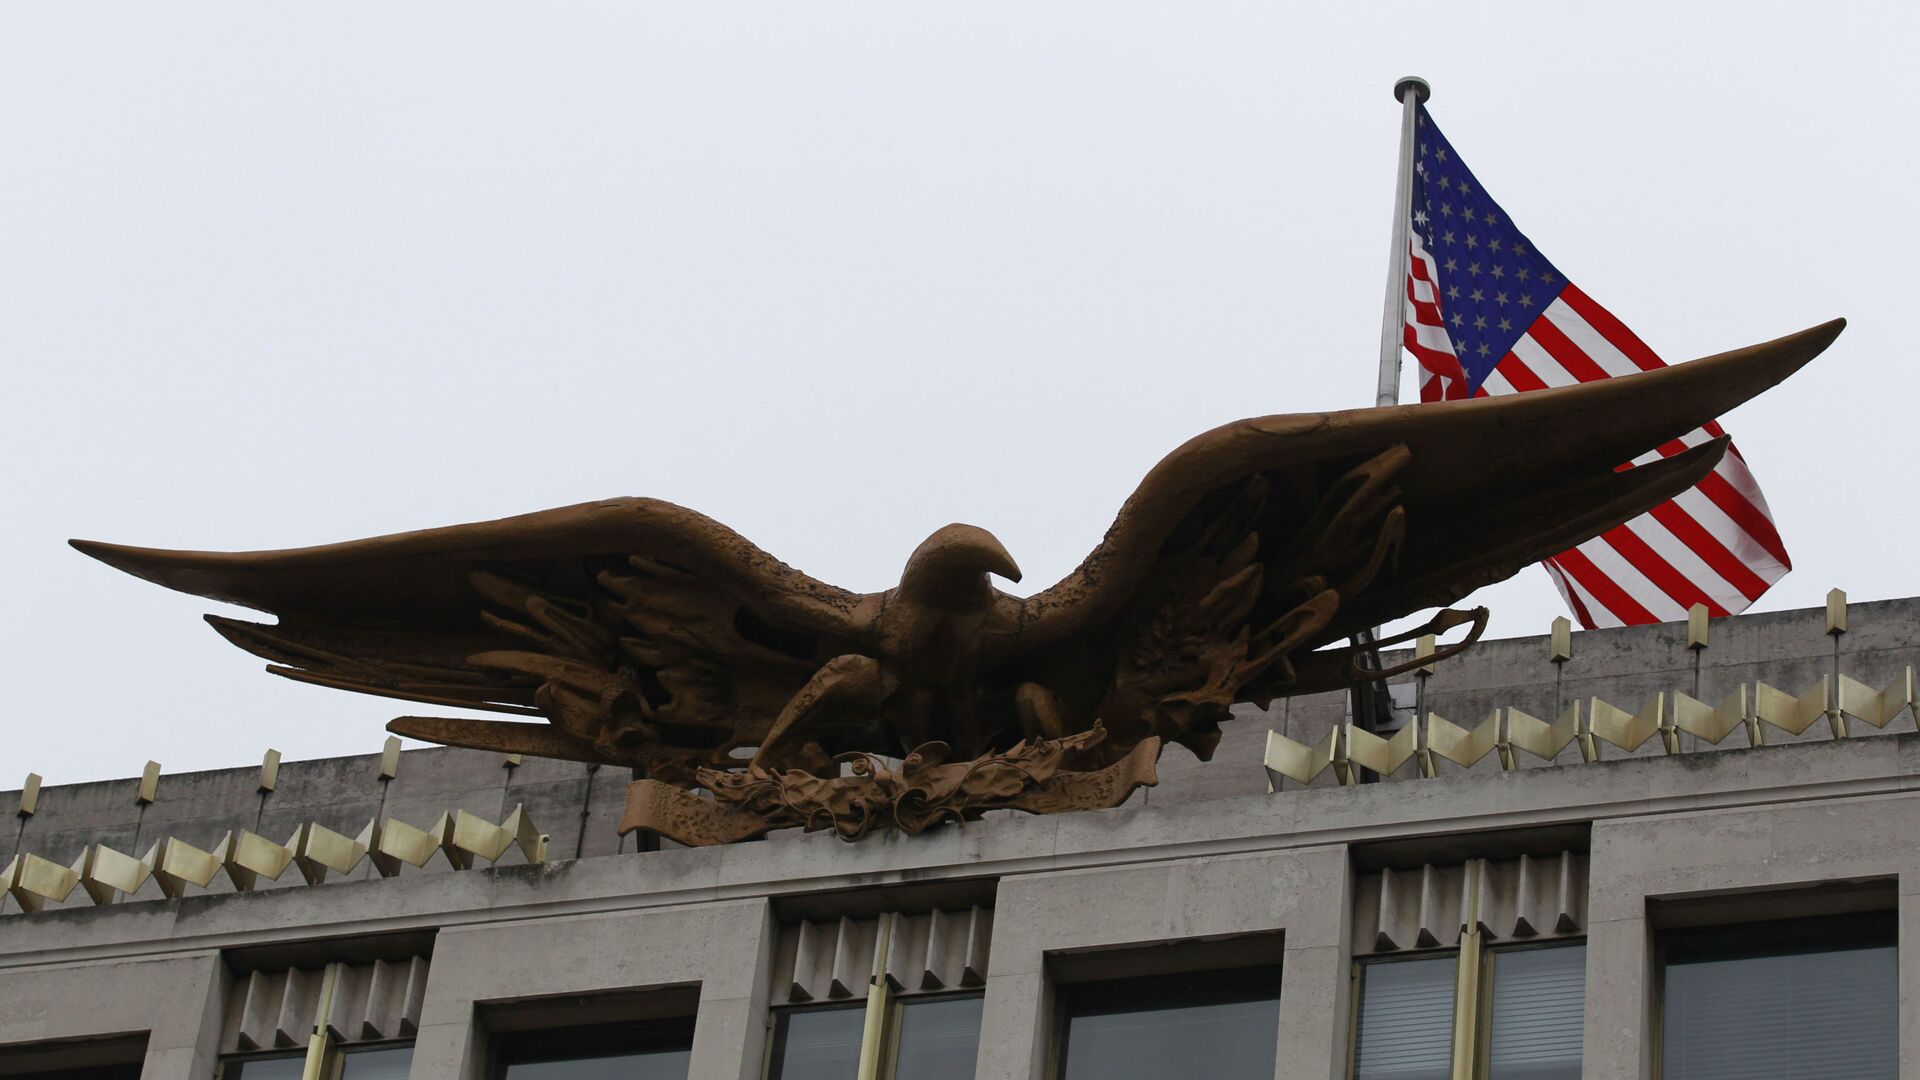 A U.S. flag flies above the Bald Eagle statue by Theodore Roszak atop the  U.S. embassy in London, Monday, Dec. 6, 2010 - Sputnik International, 1920, 11.04.2022